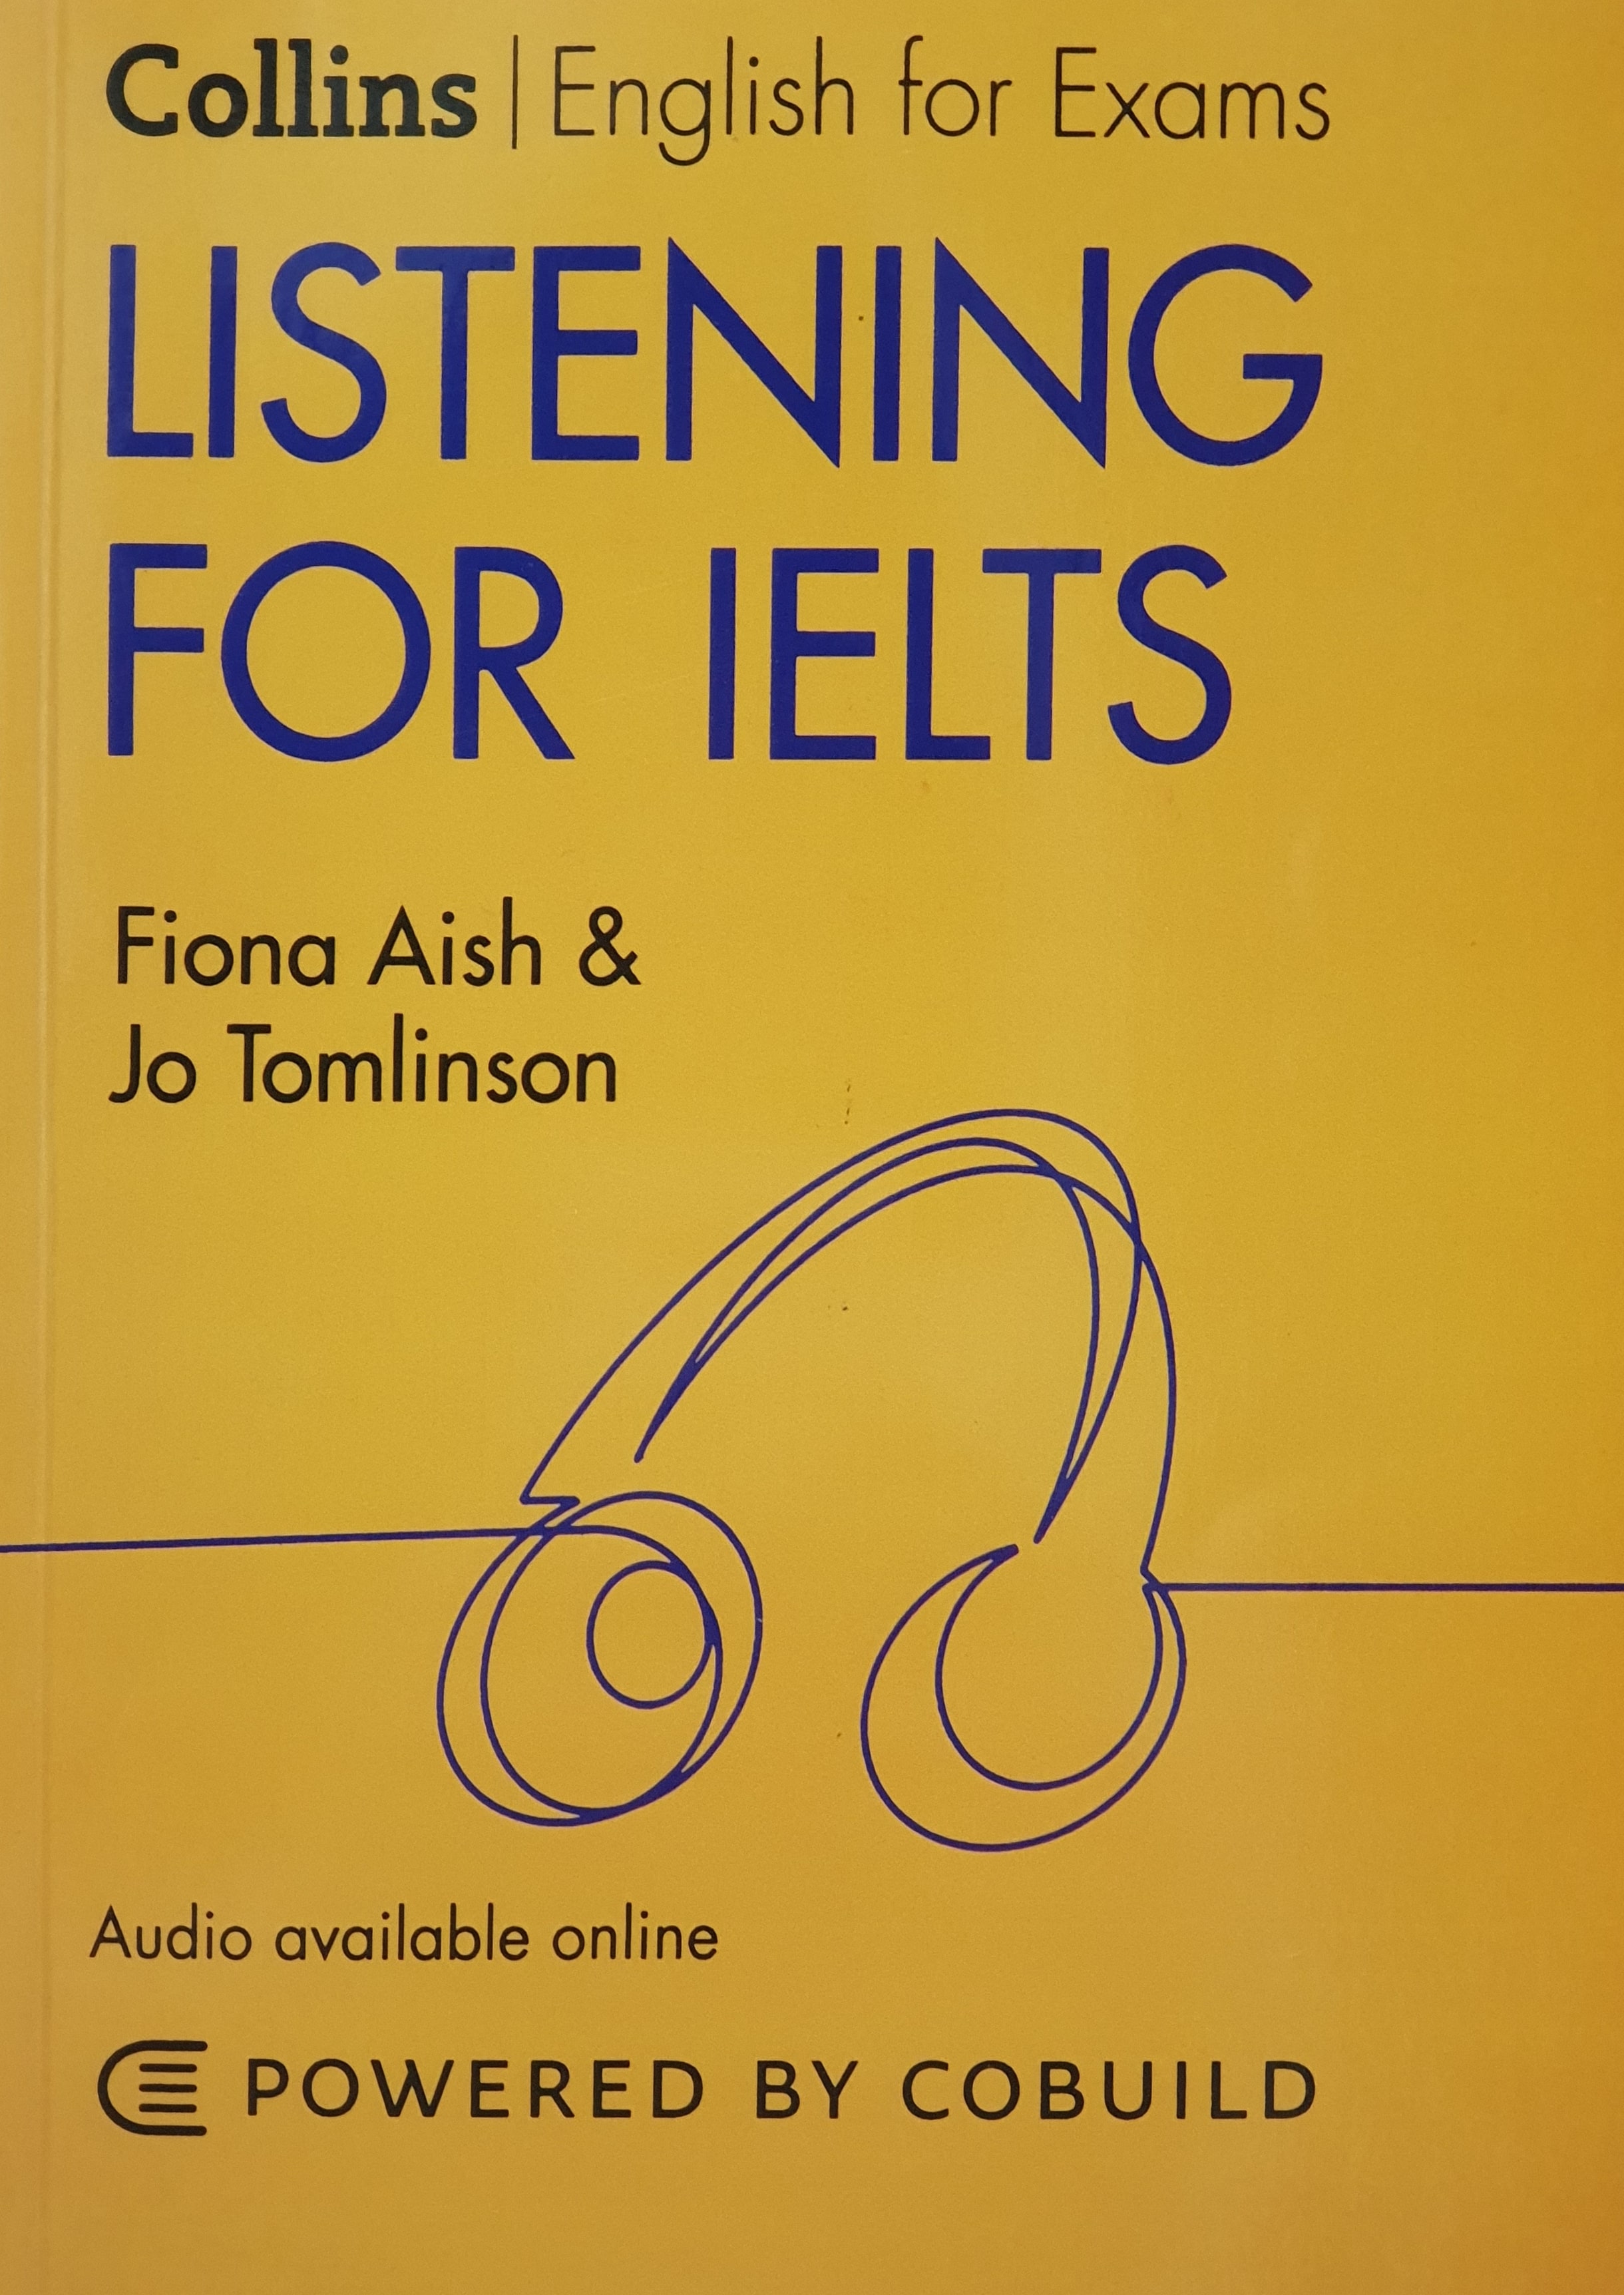 کتاب دست دوم Collins Listening for IELTS